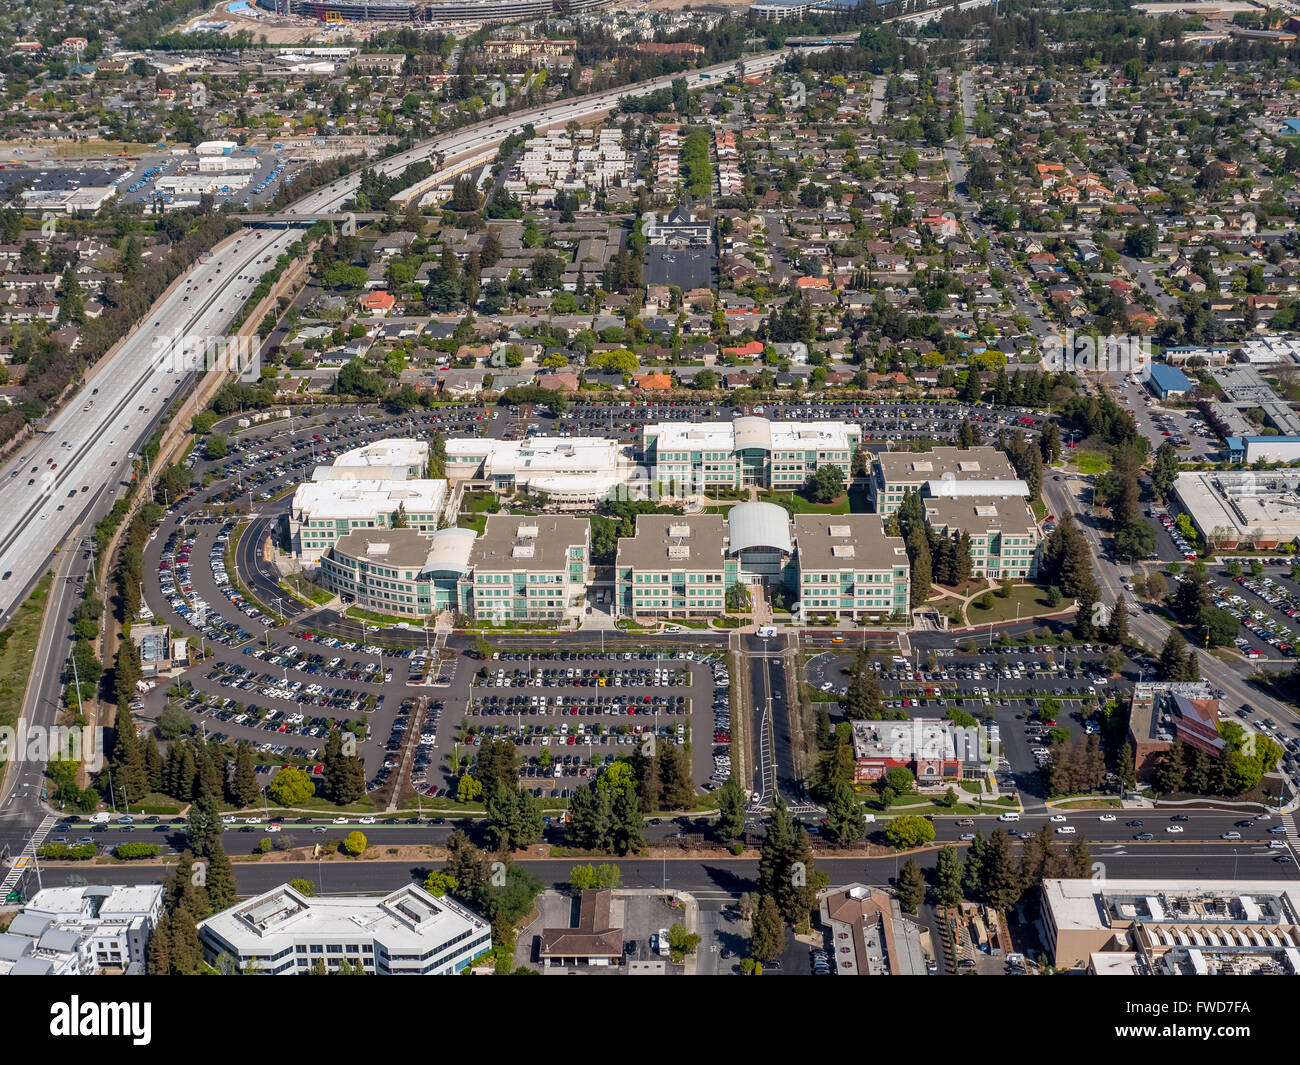 Apple Campus, Apple Inc., aerial, Apple University, above Apple Inc headquarters Cupertino California,  Silicon Valley Stock Photo